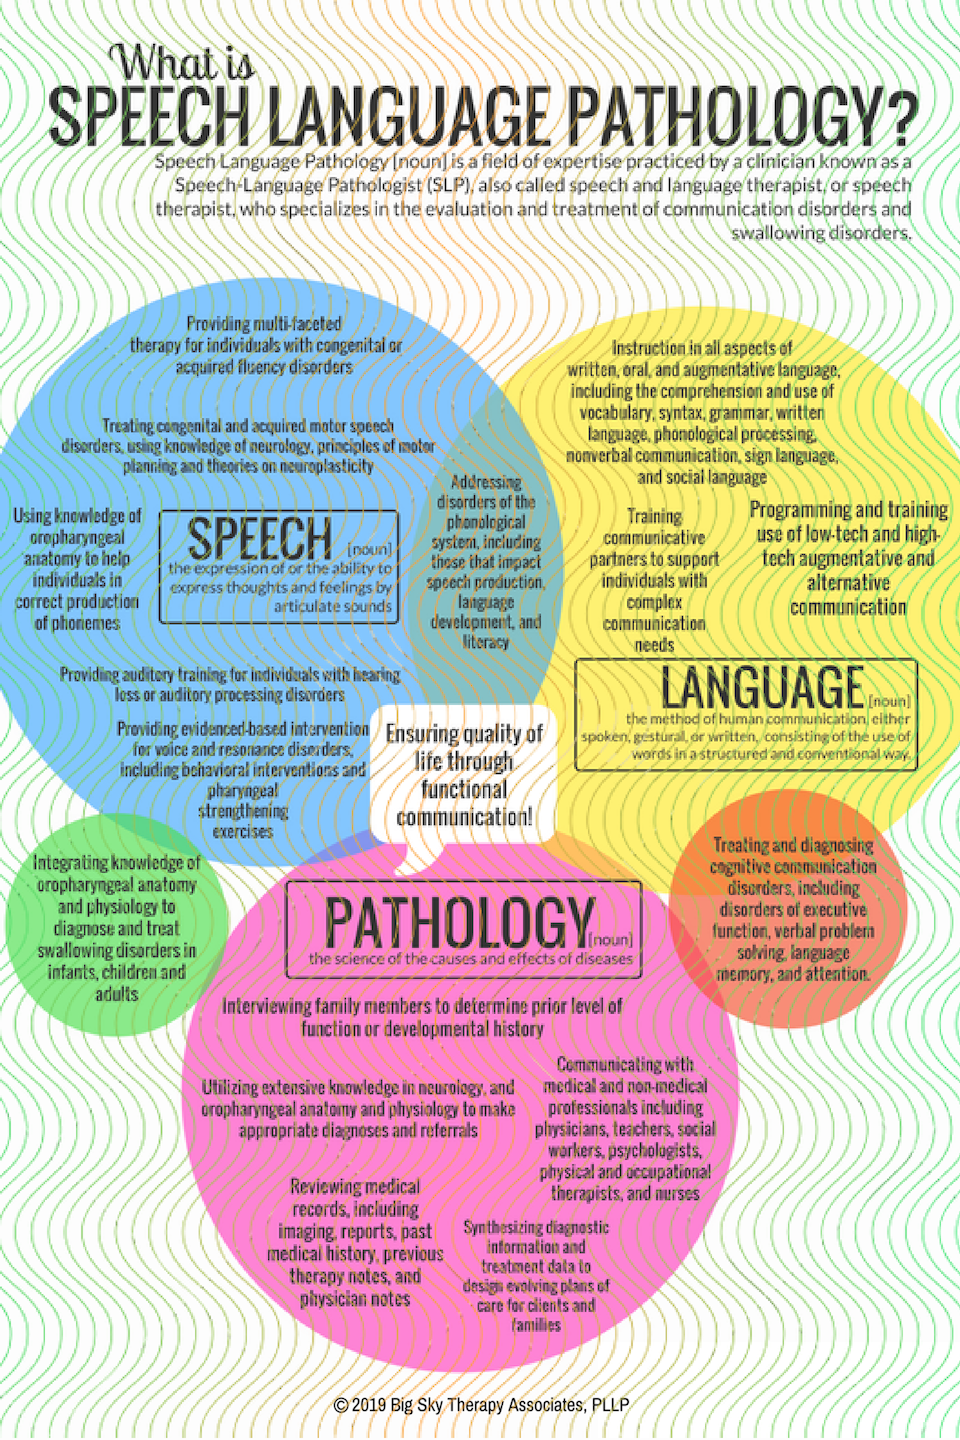 speech language pathology western